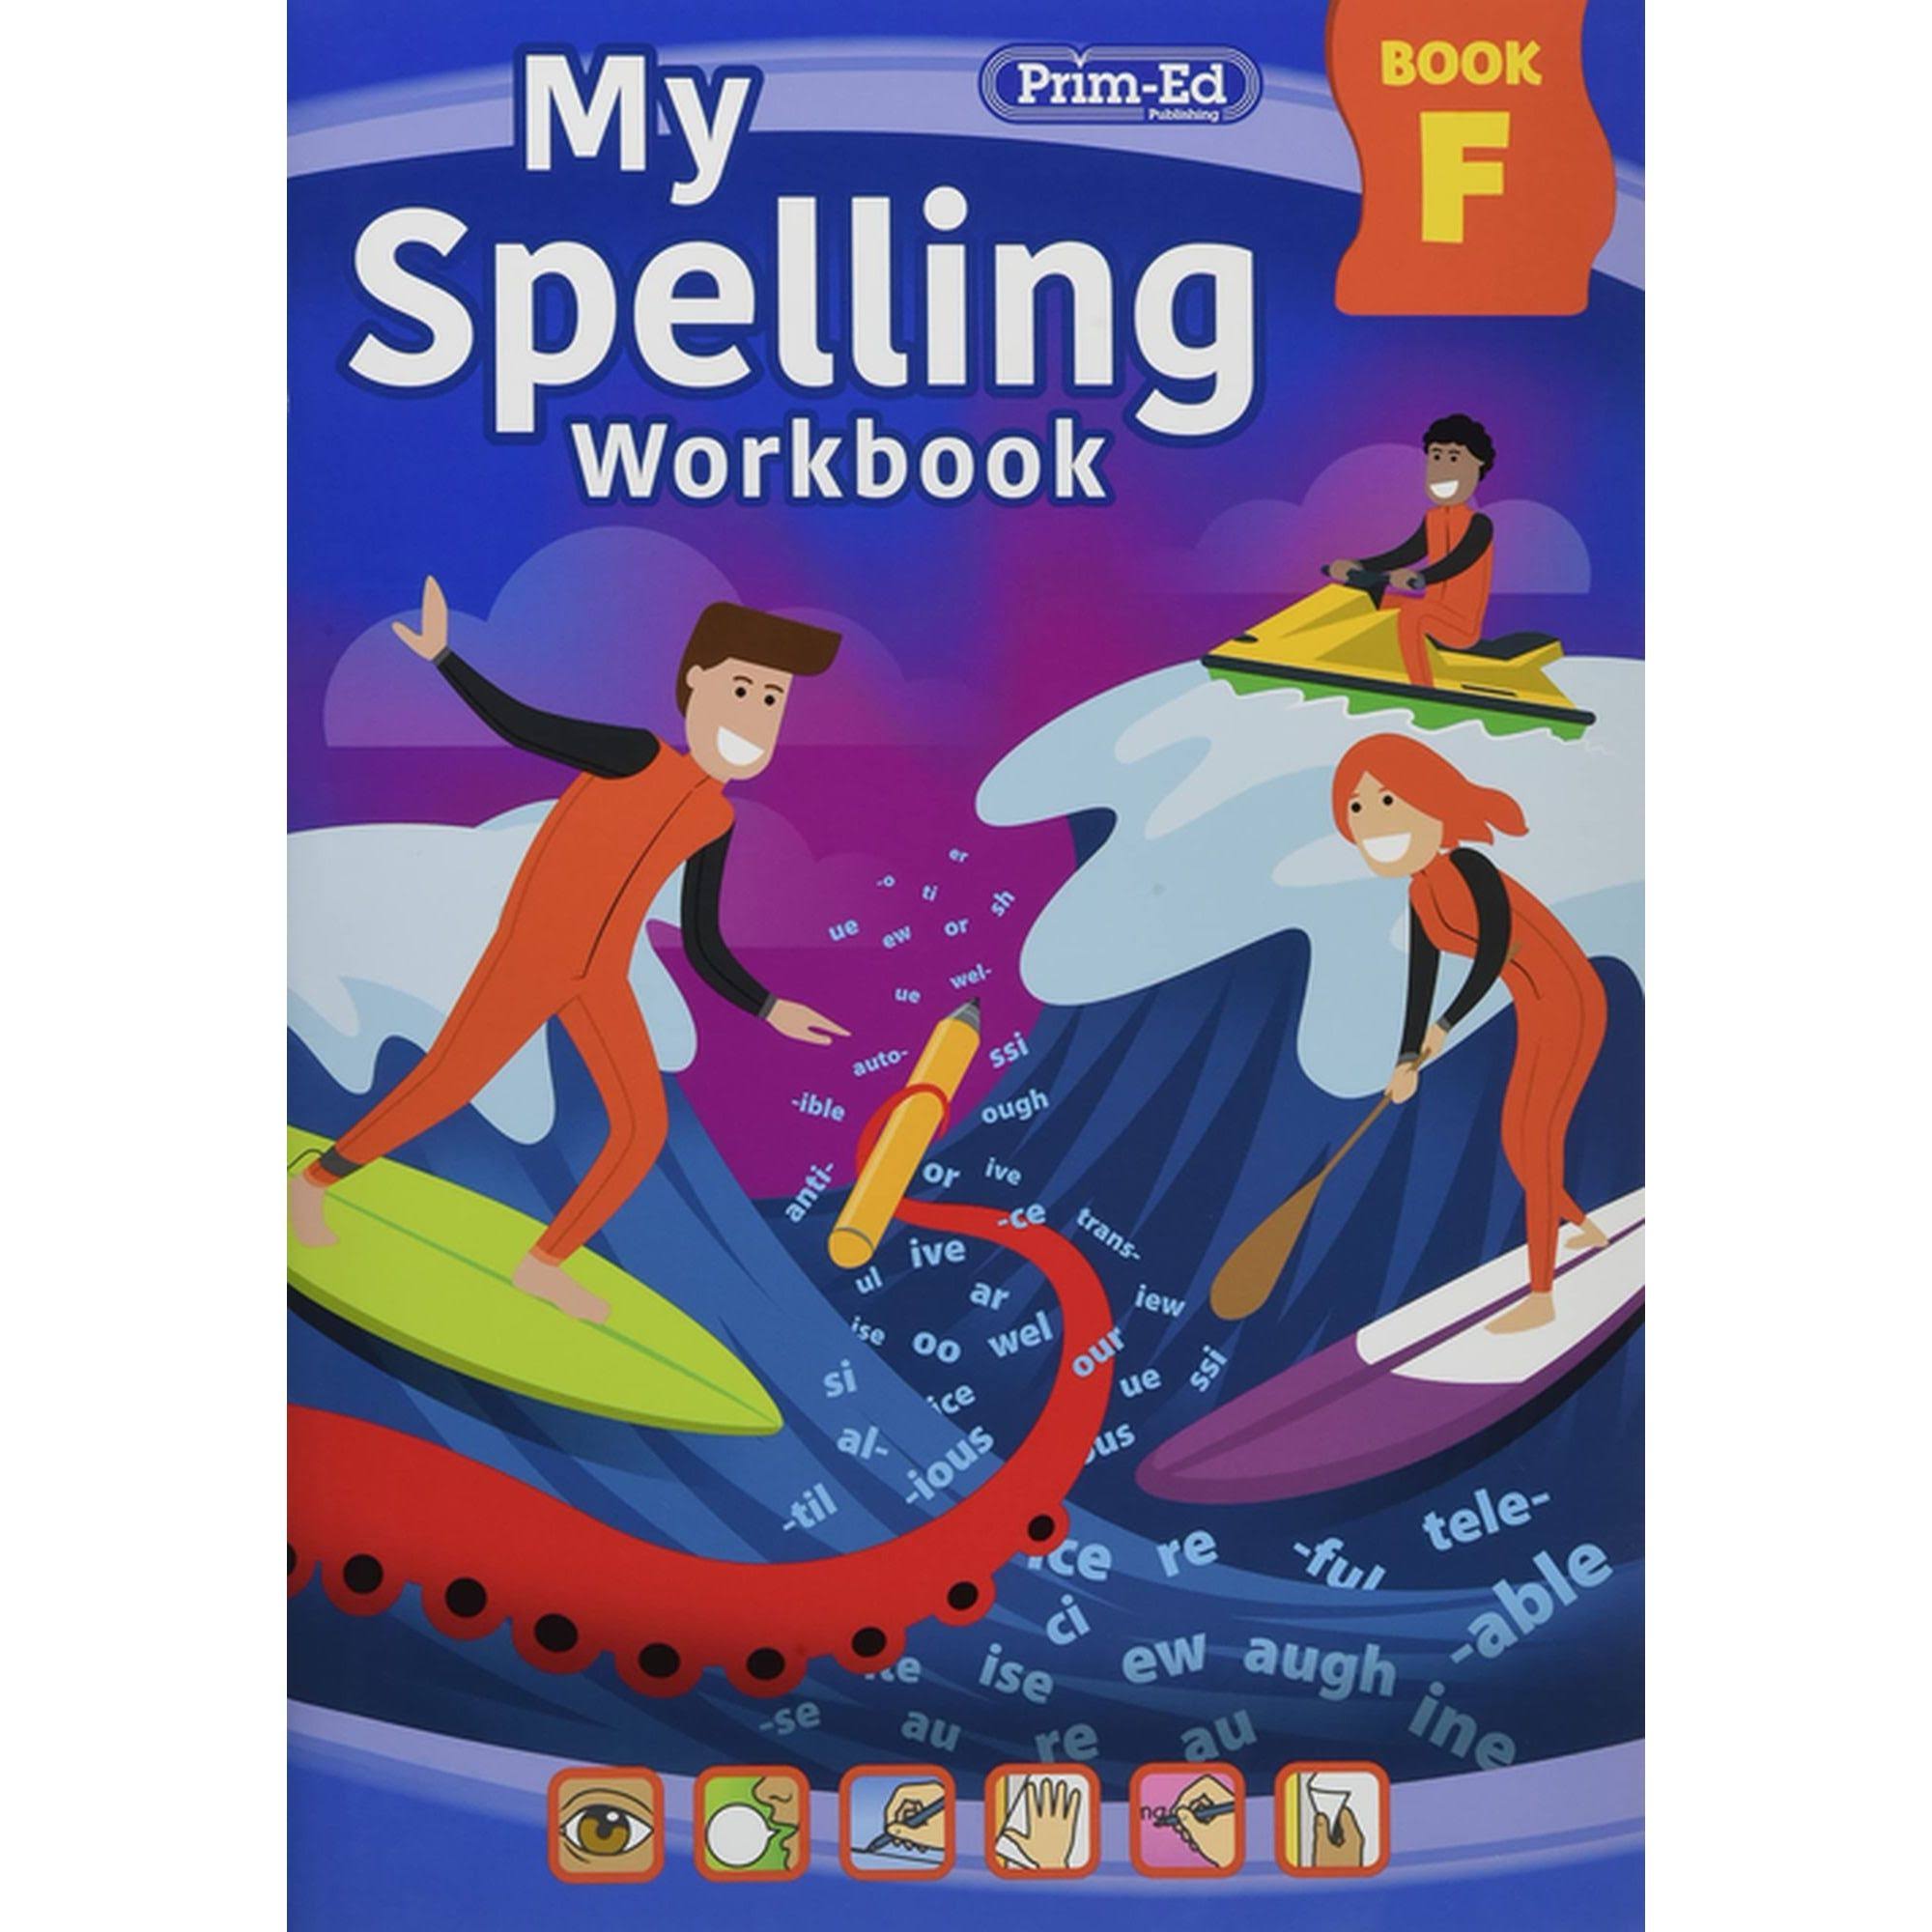 My Spelling Workbook Book F [Book]